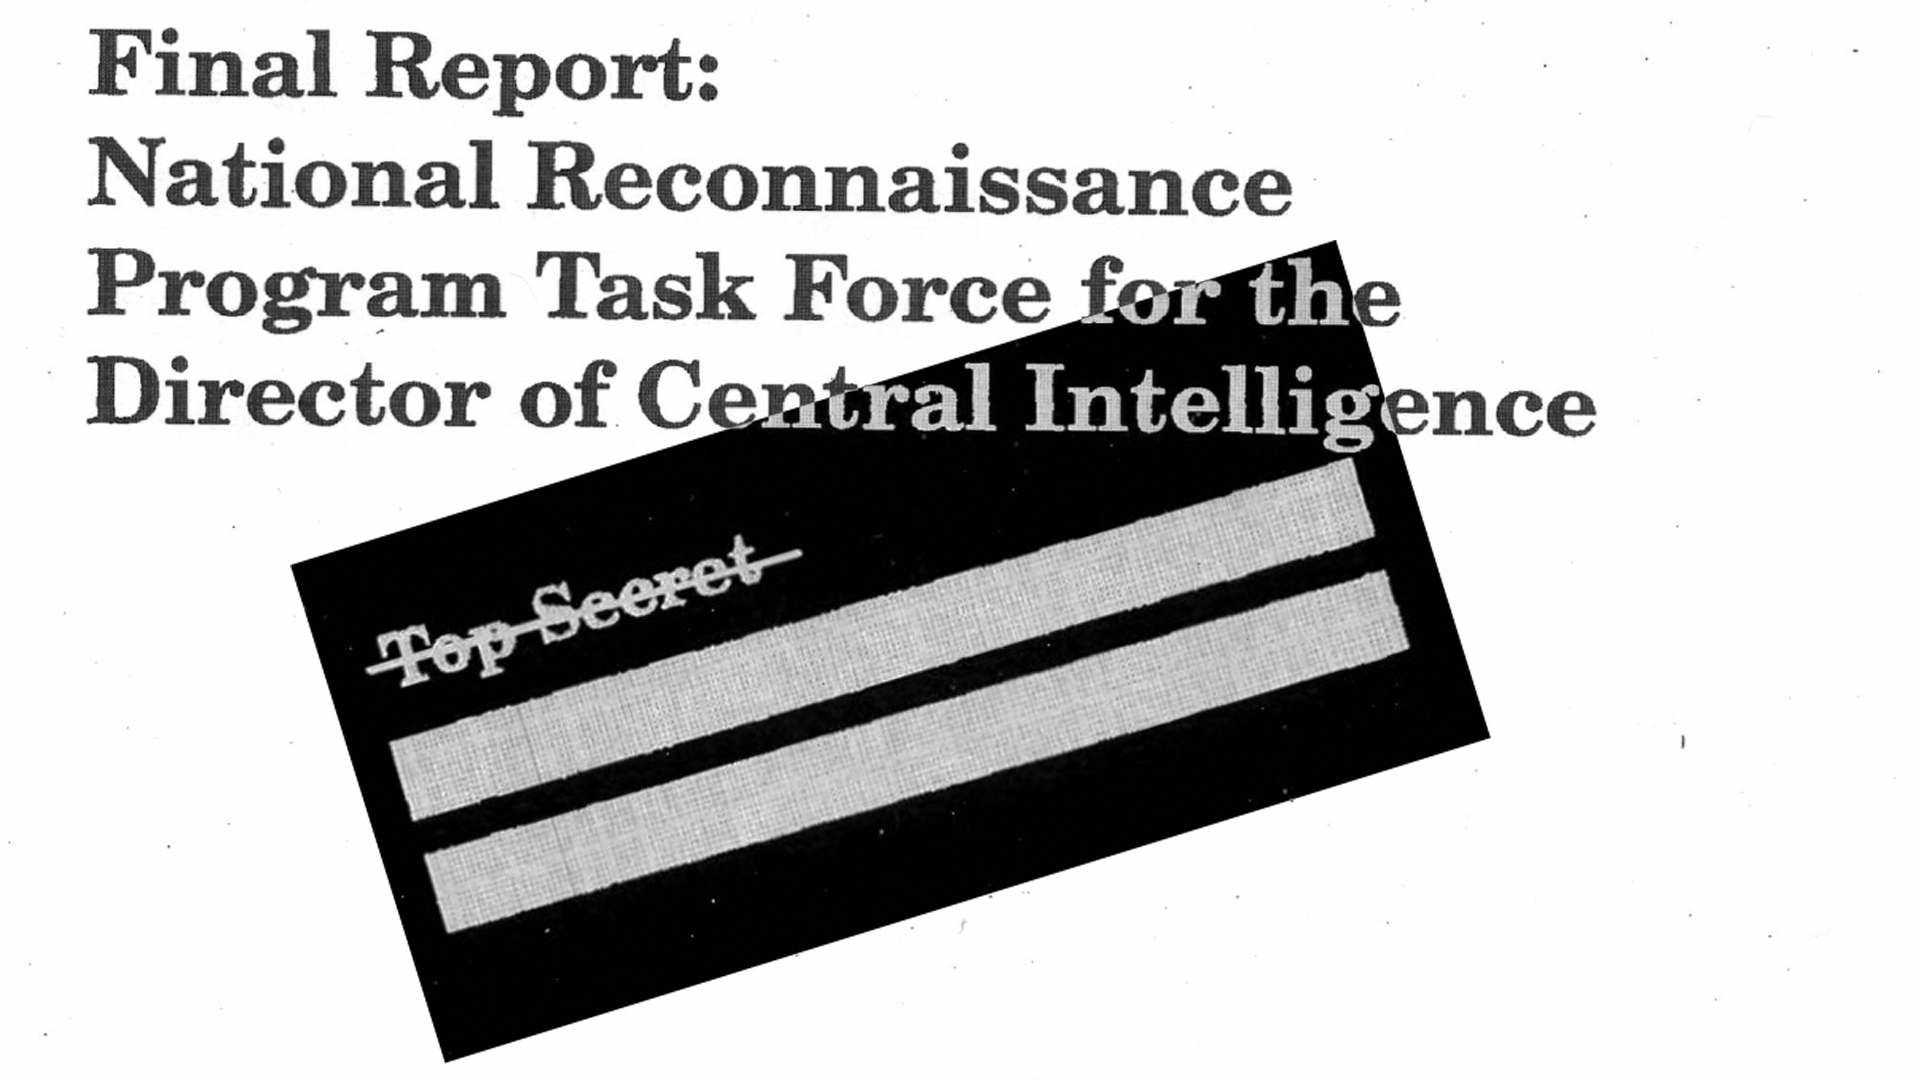 Final Report: National Reconnaissance Program Task Force for the Director of Central Intelligence, September 1992